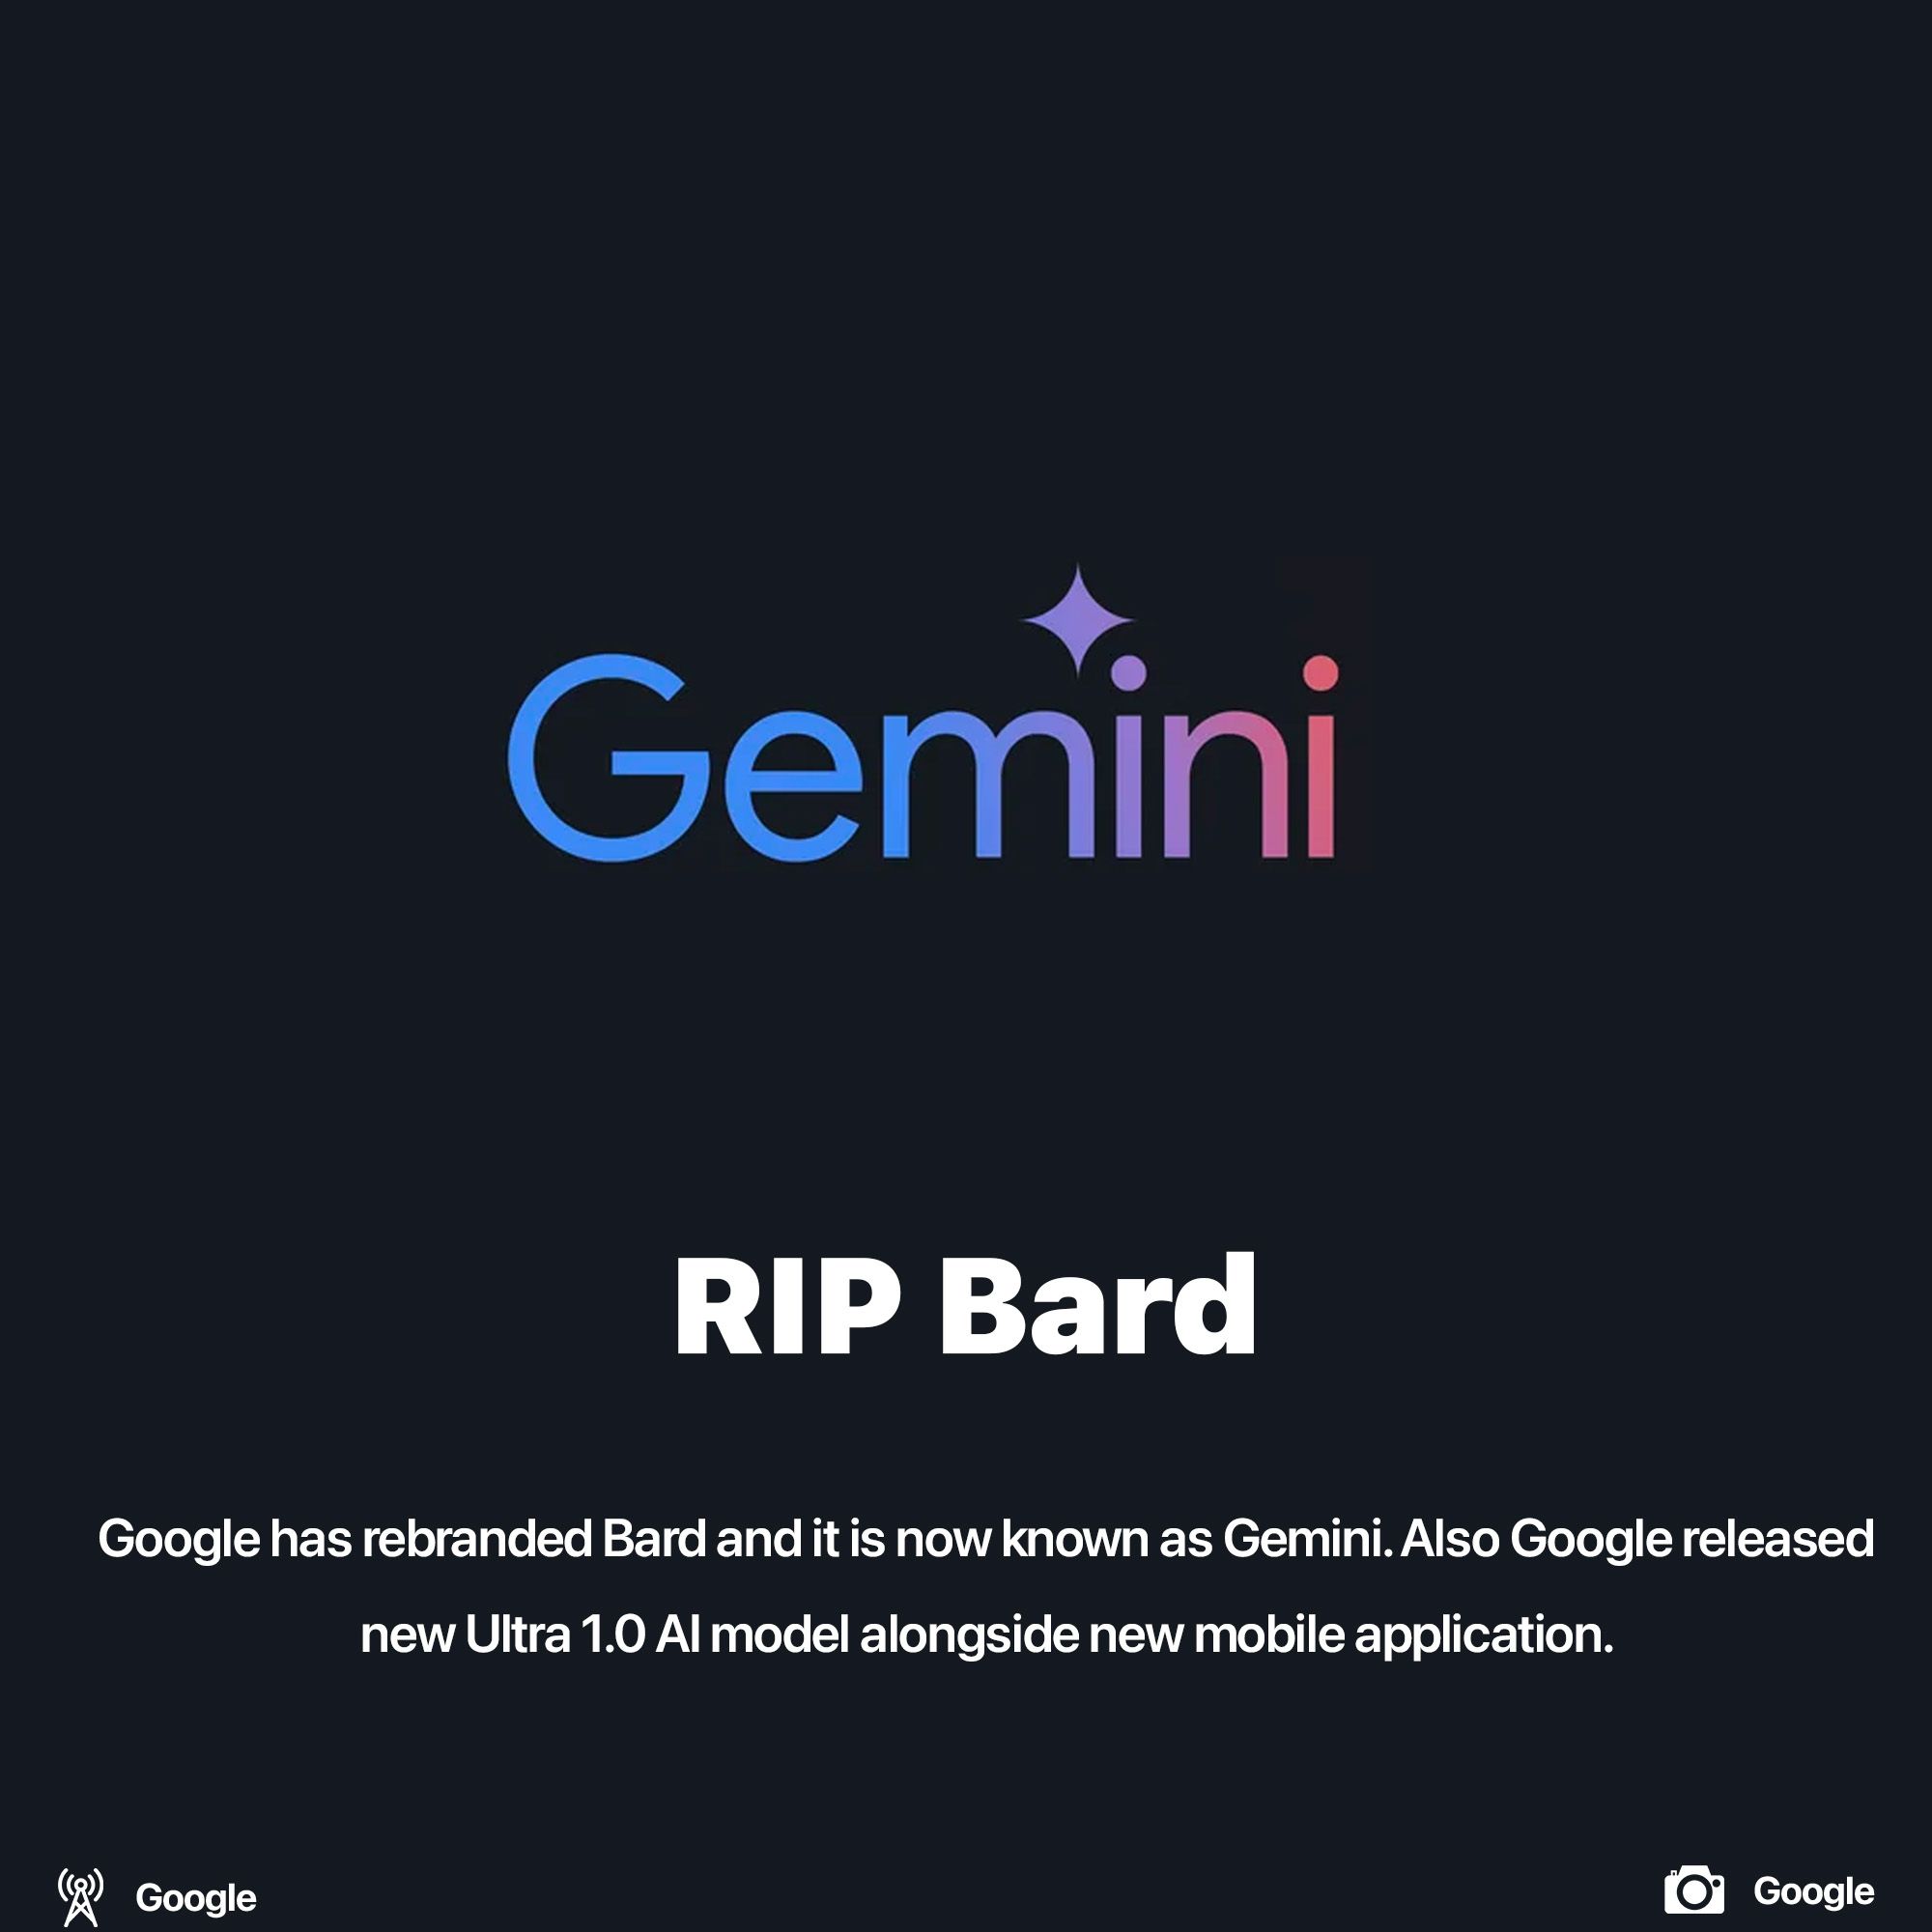 Google Gemini replaced Bard